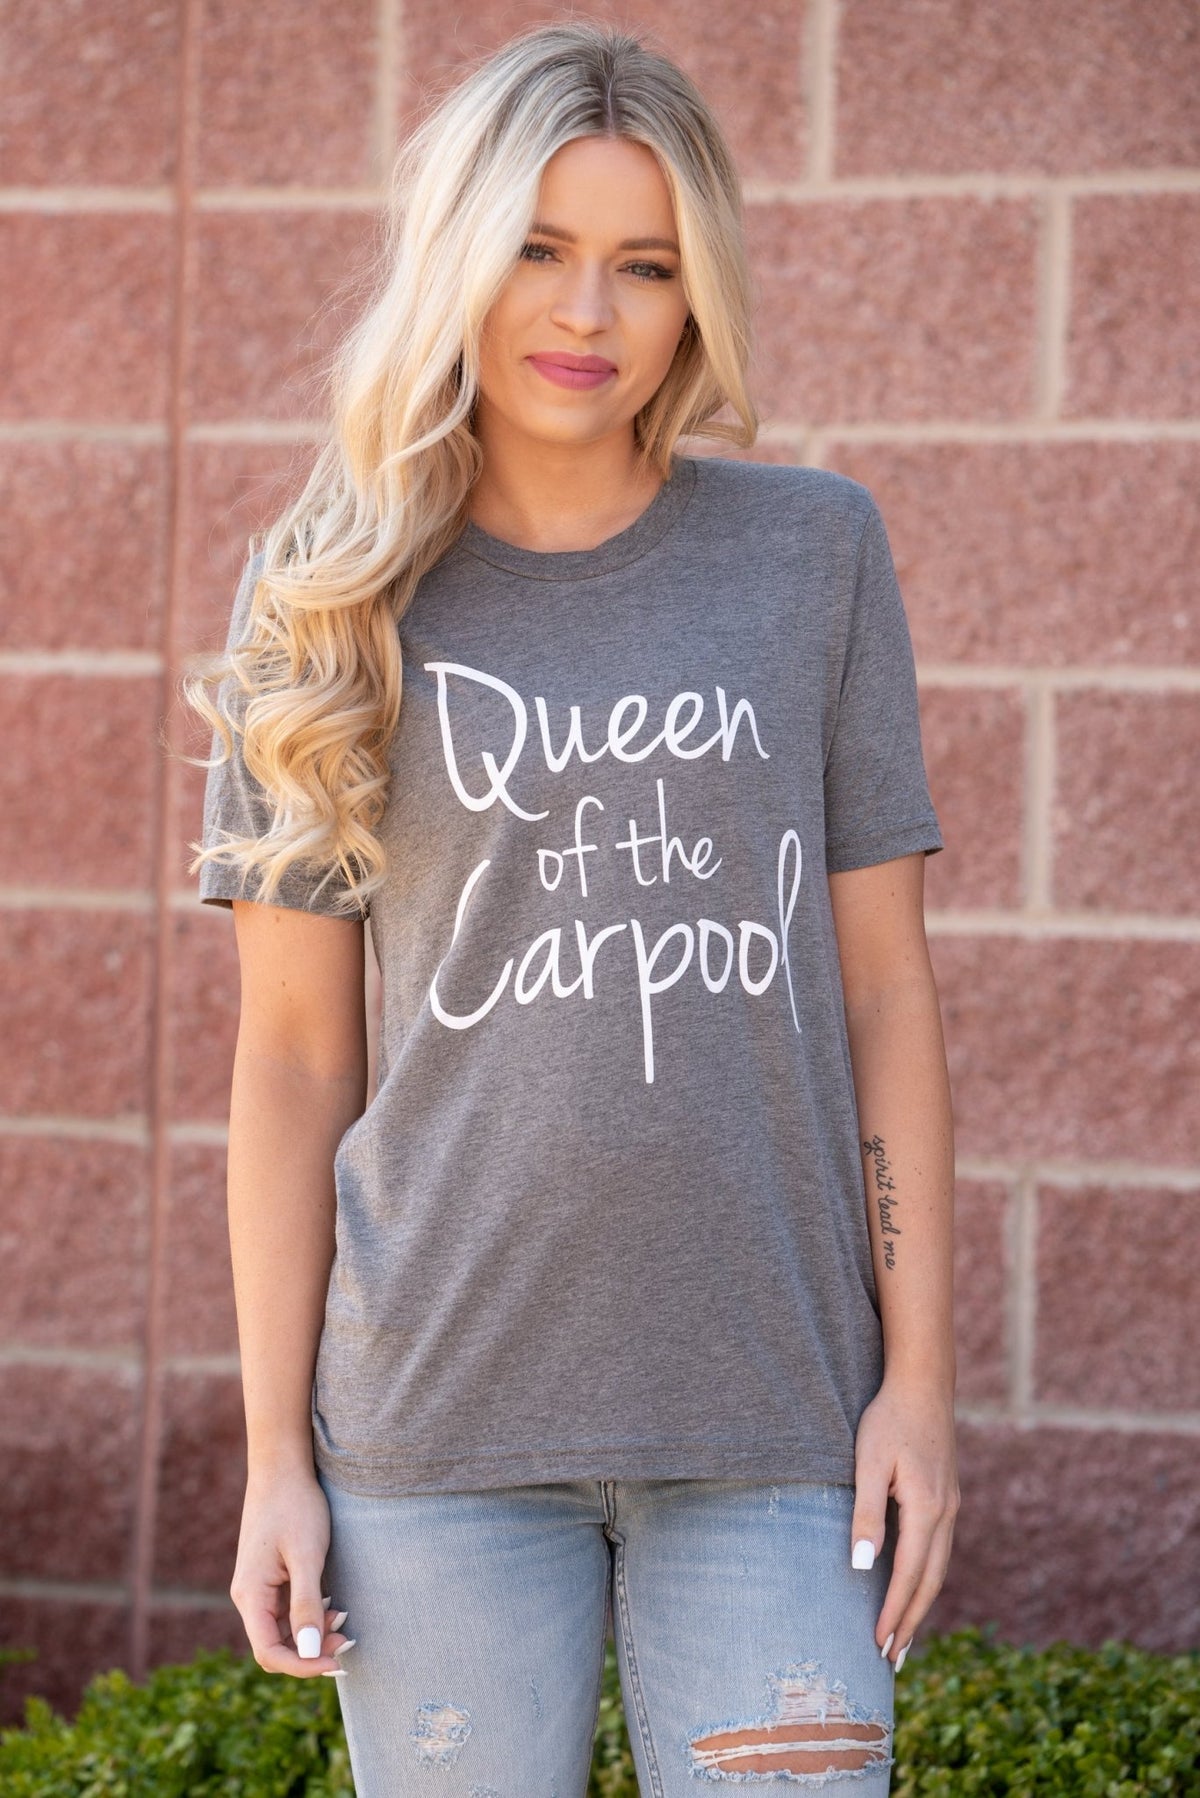 Carpool unisex short sleeve t-shirt grey - Stylish T-shirts - Trendy Graphic T-Shirts and Tank Tops at Lush Fashion Lounge Boutique in Oklahoma City